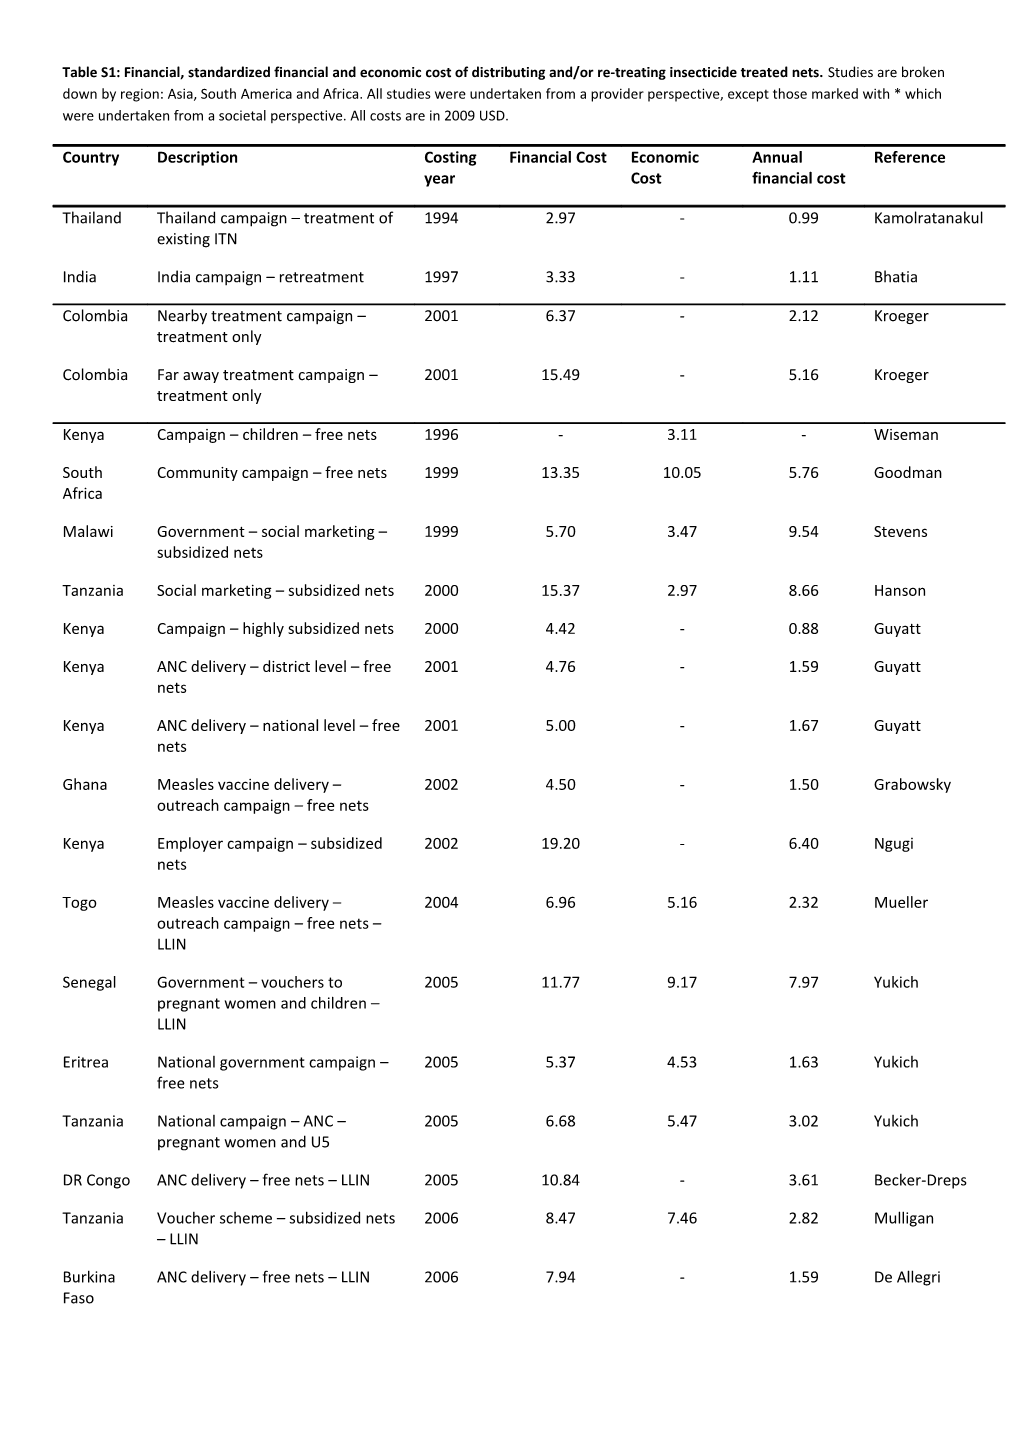 1.Kamolratanakul P, Butraporn P, Prasittisuk M, Prasittisuk C, Indaratna K: Cost-Effectiveness